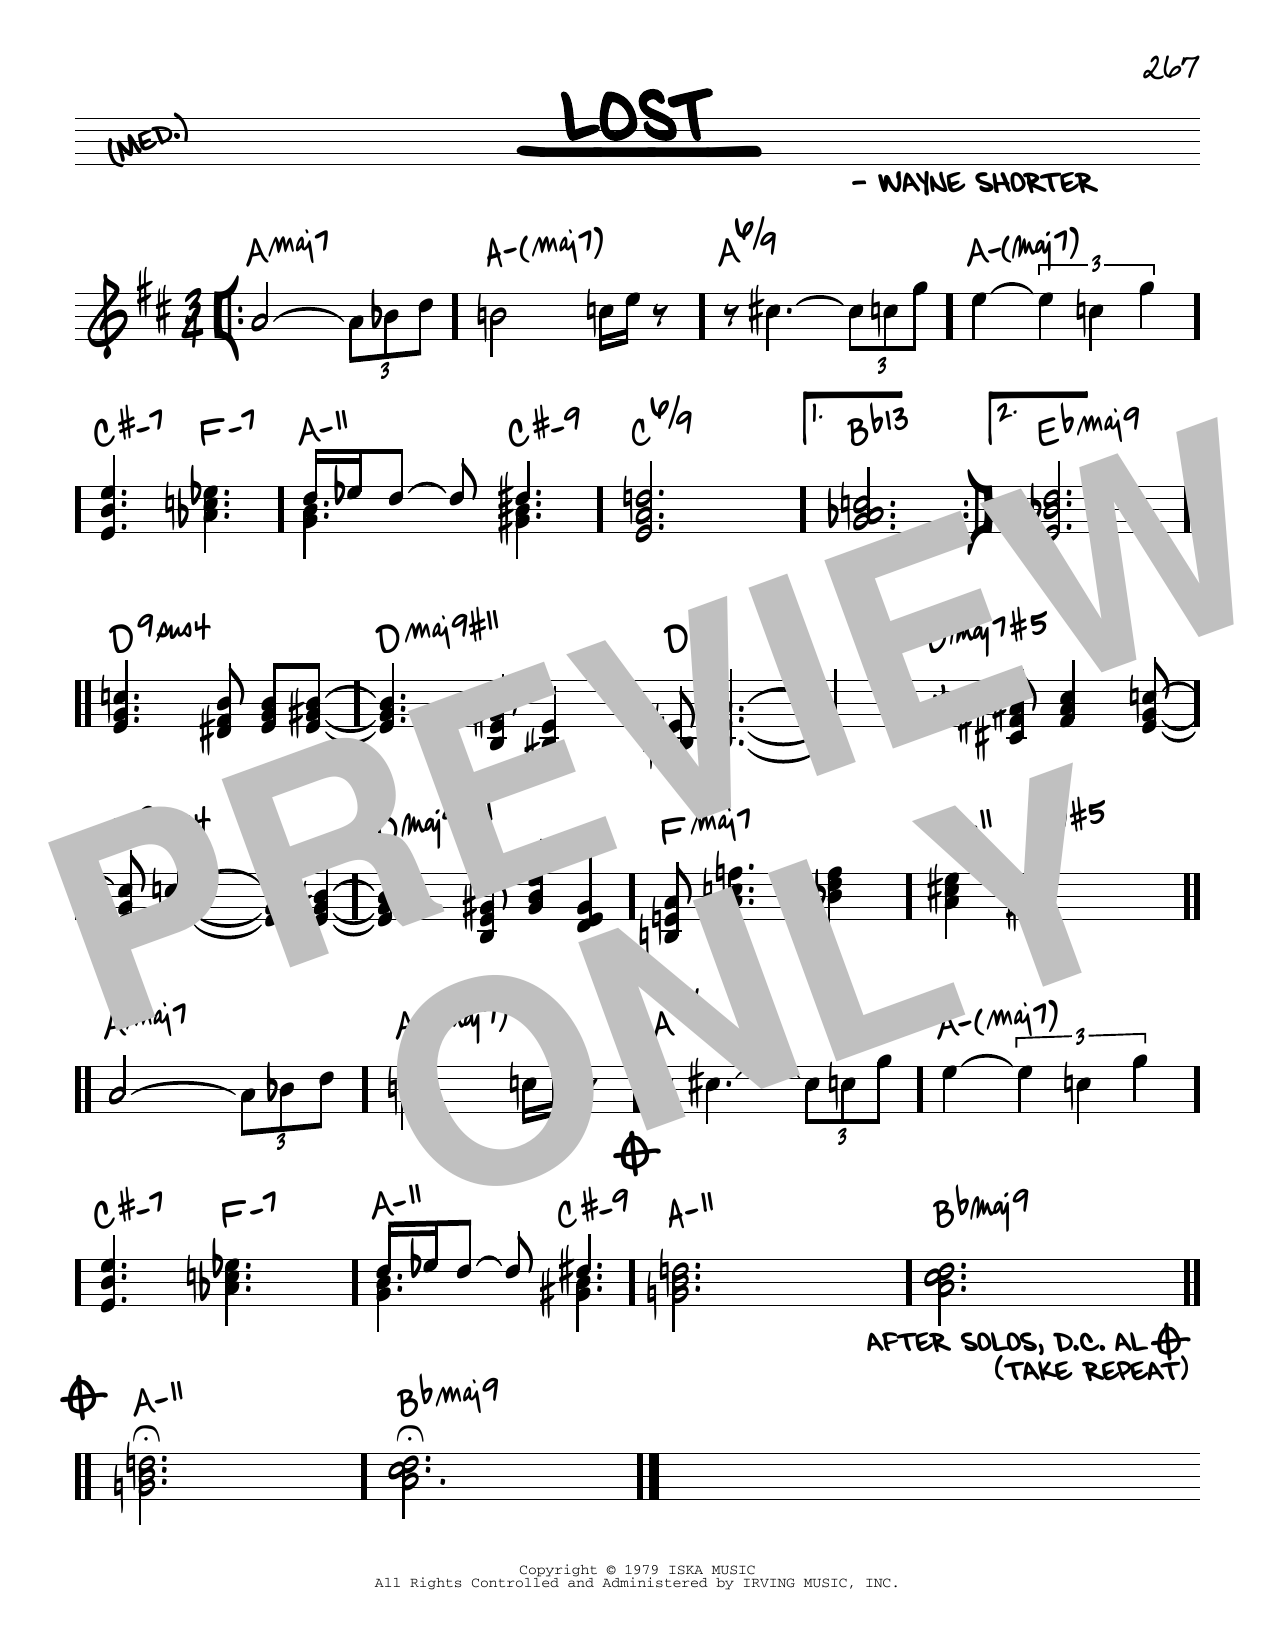 Wayne Shorter Lost Sheet Music Notes & Chords for Real Book – Melody & Chords - Download or Print PDF